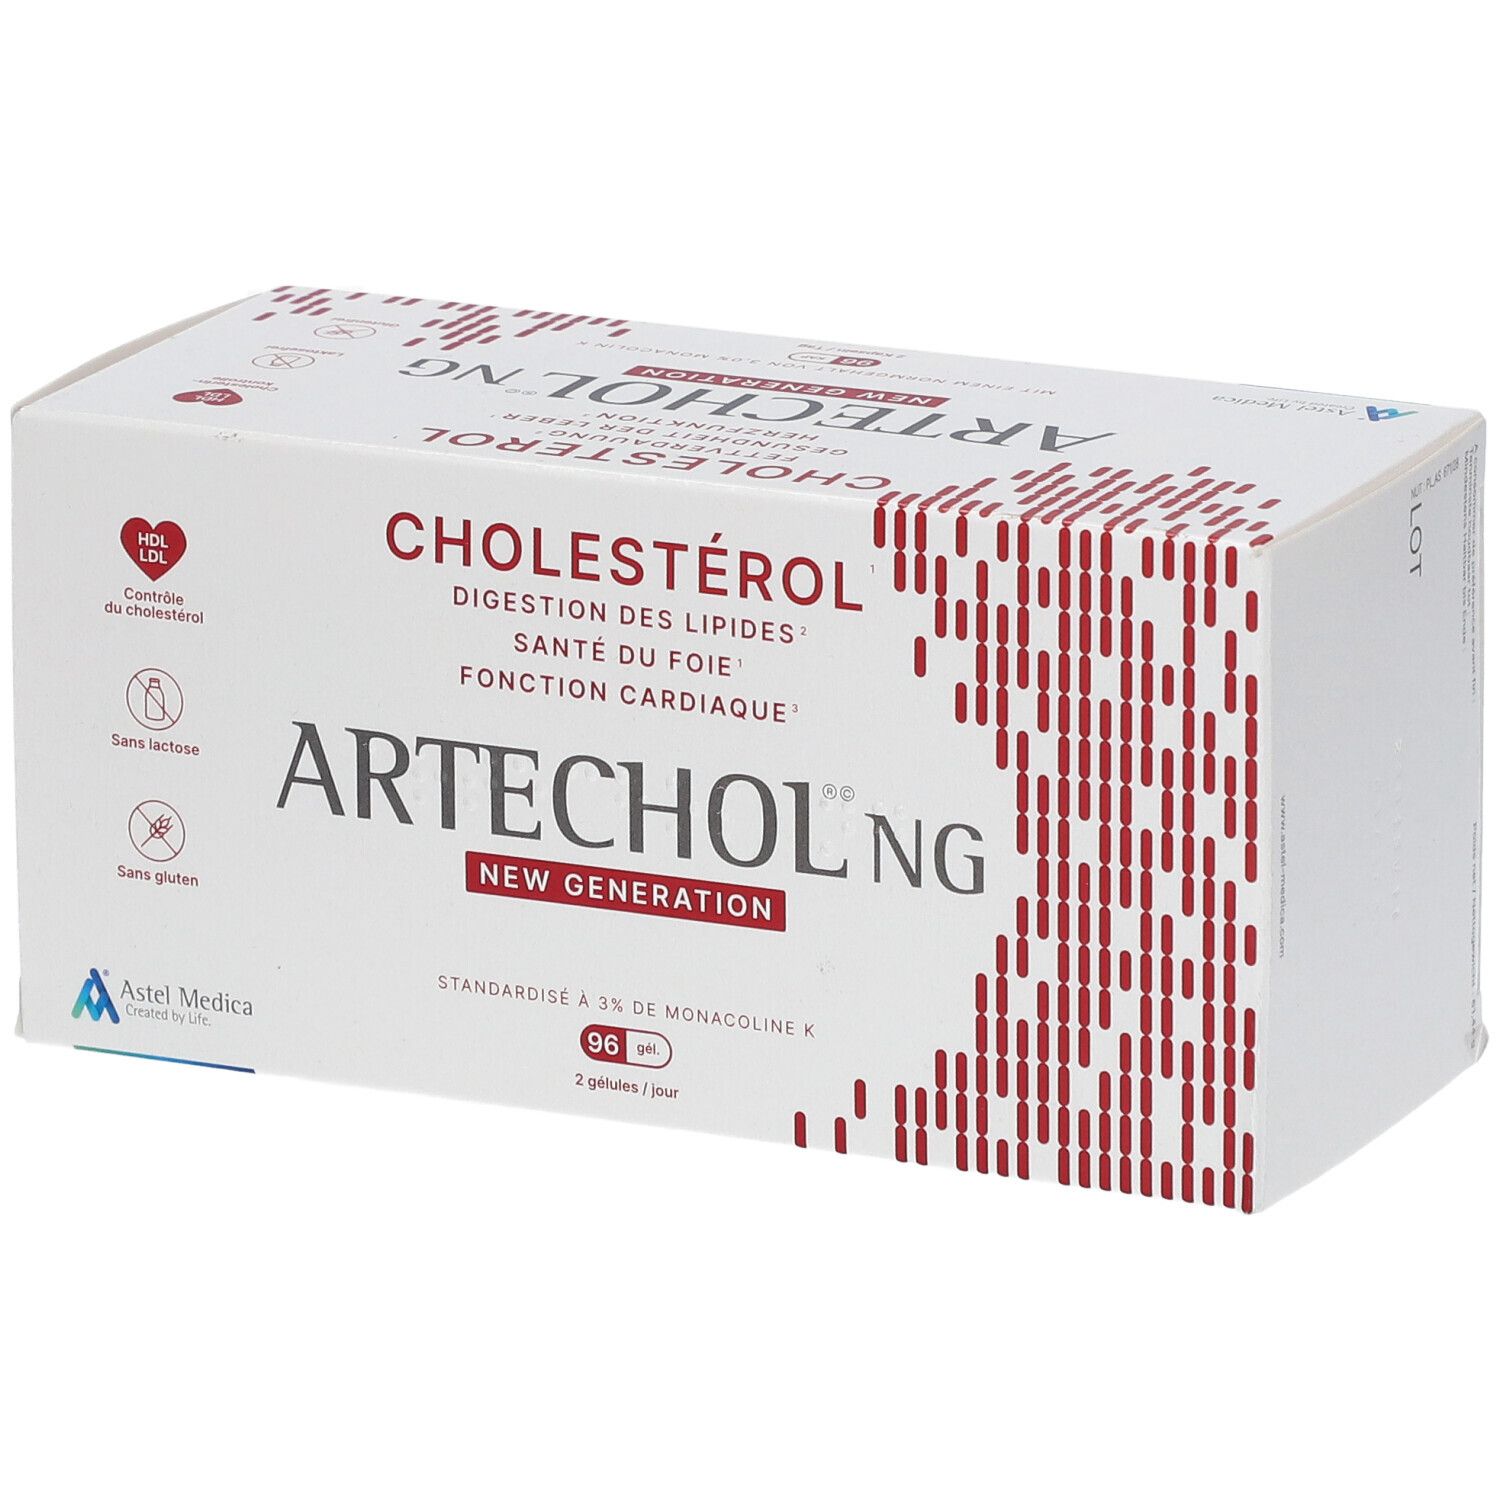 Astel Medica Artechol® NG